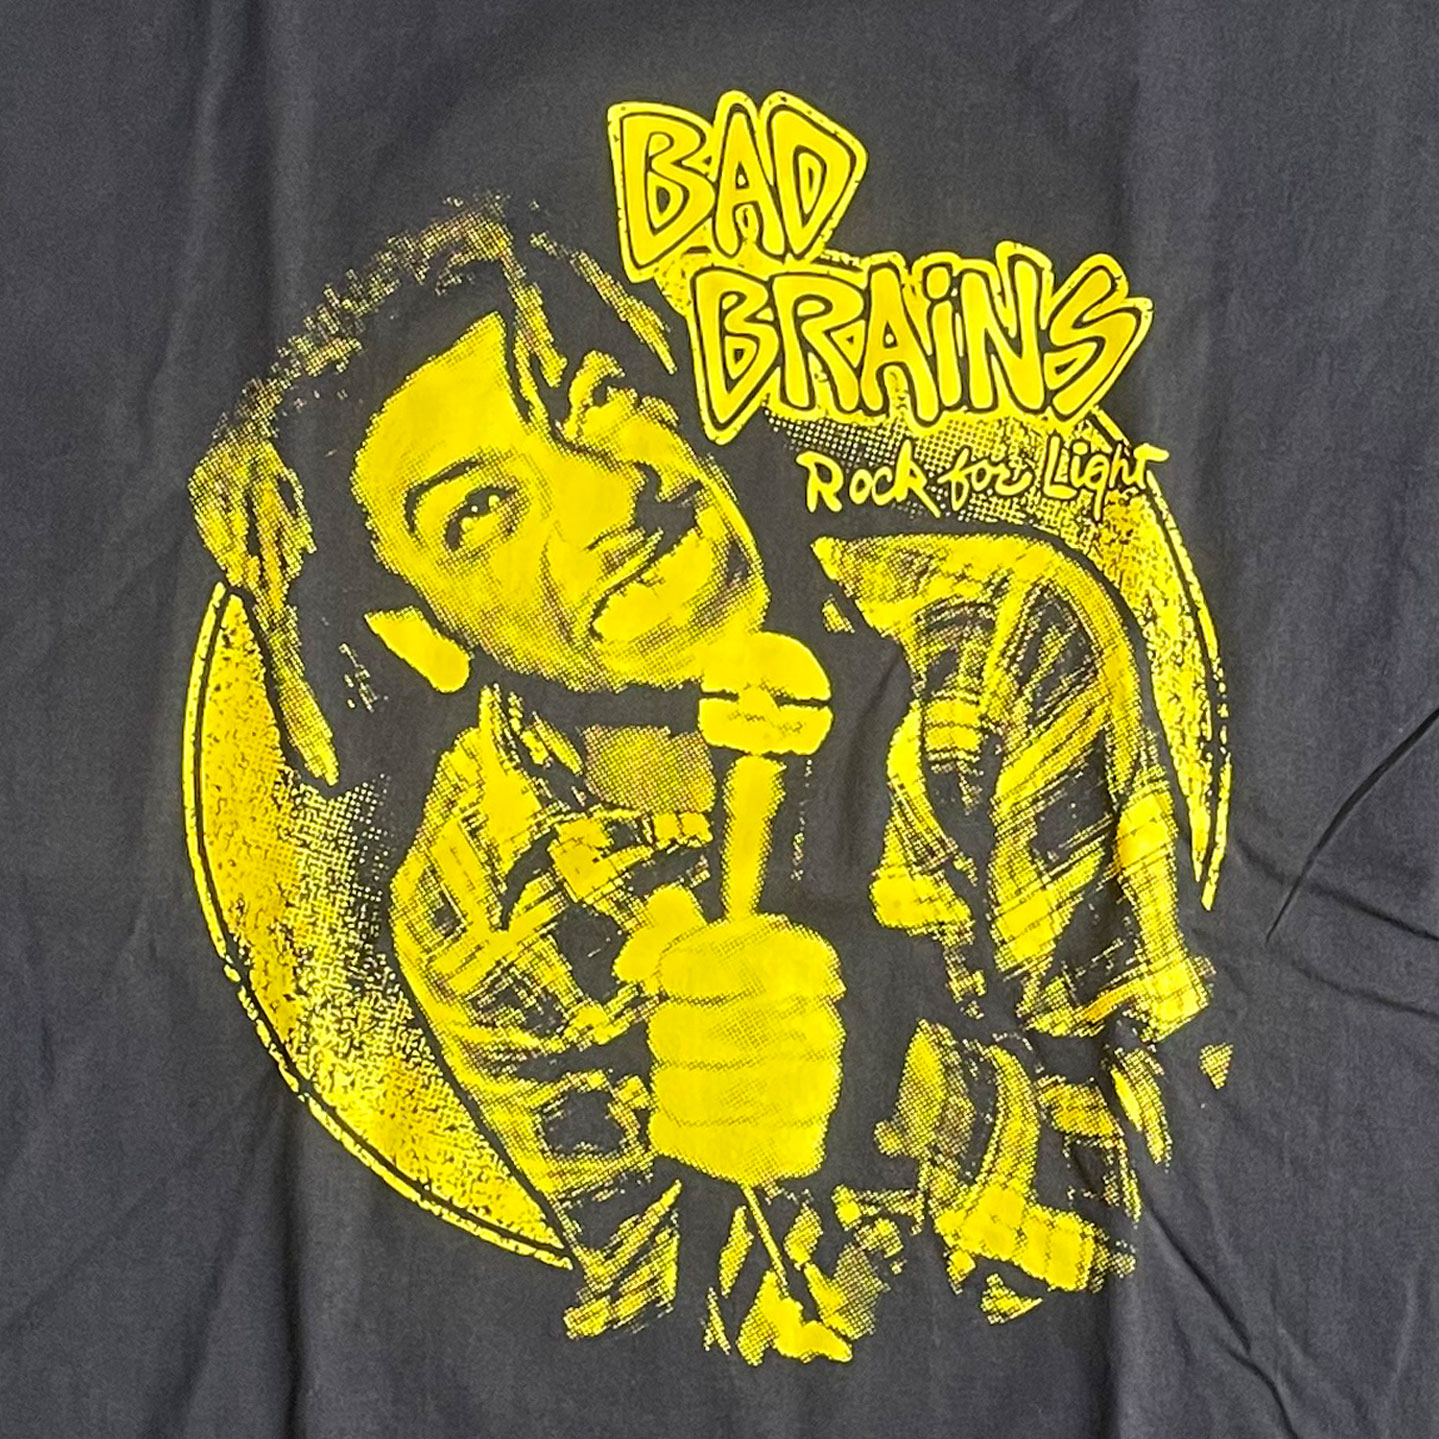 BAD BRAINS Tシャツ ROCK FOR LIGHT 2